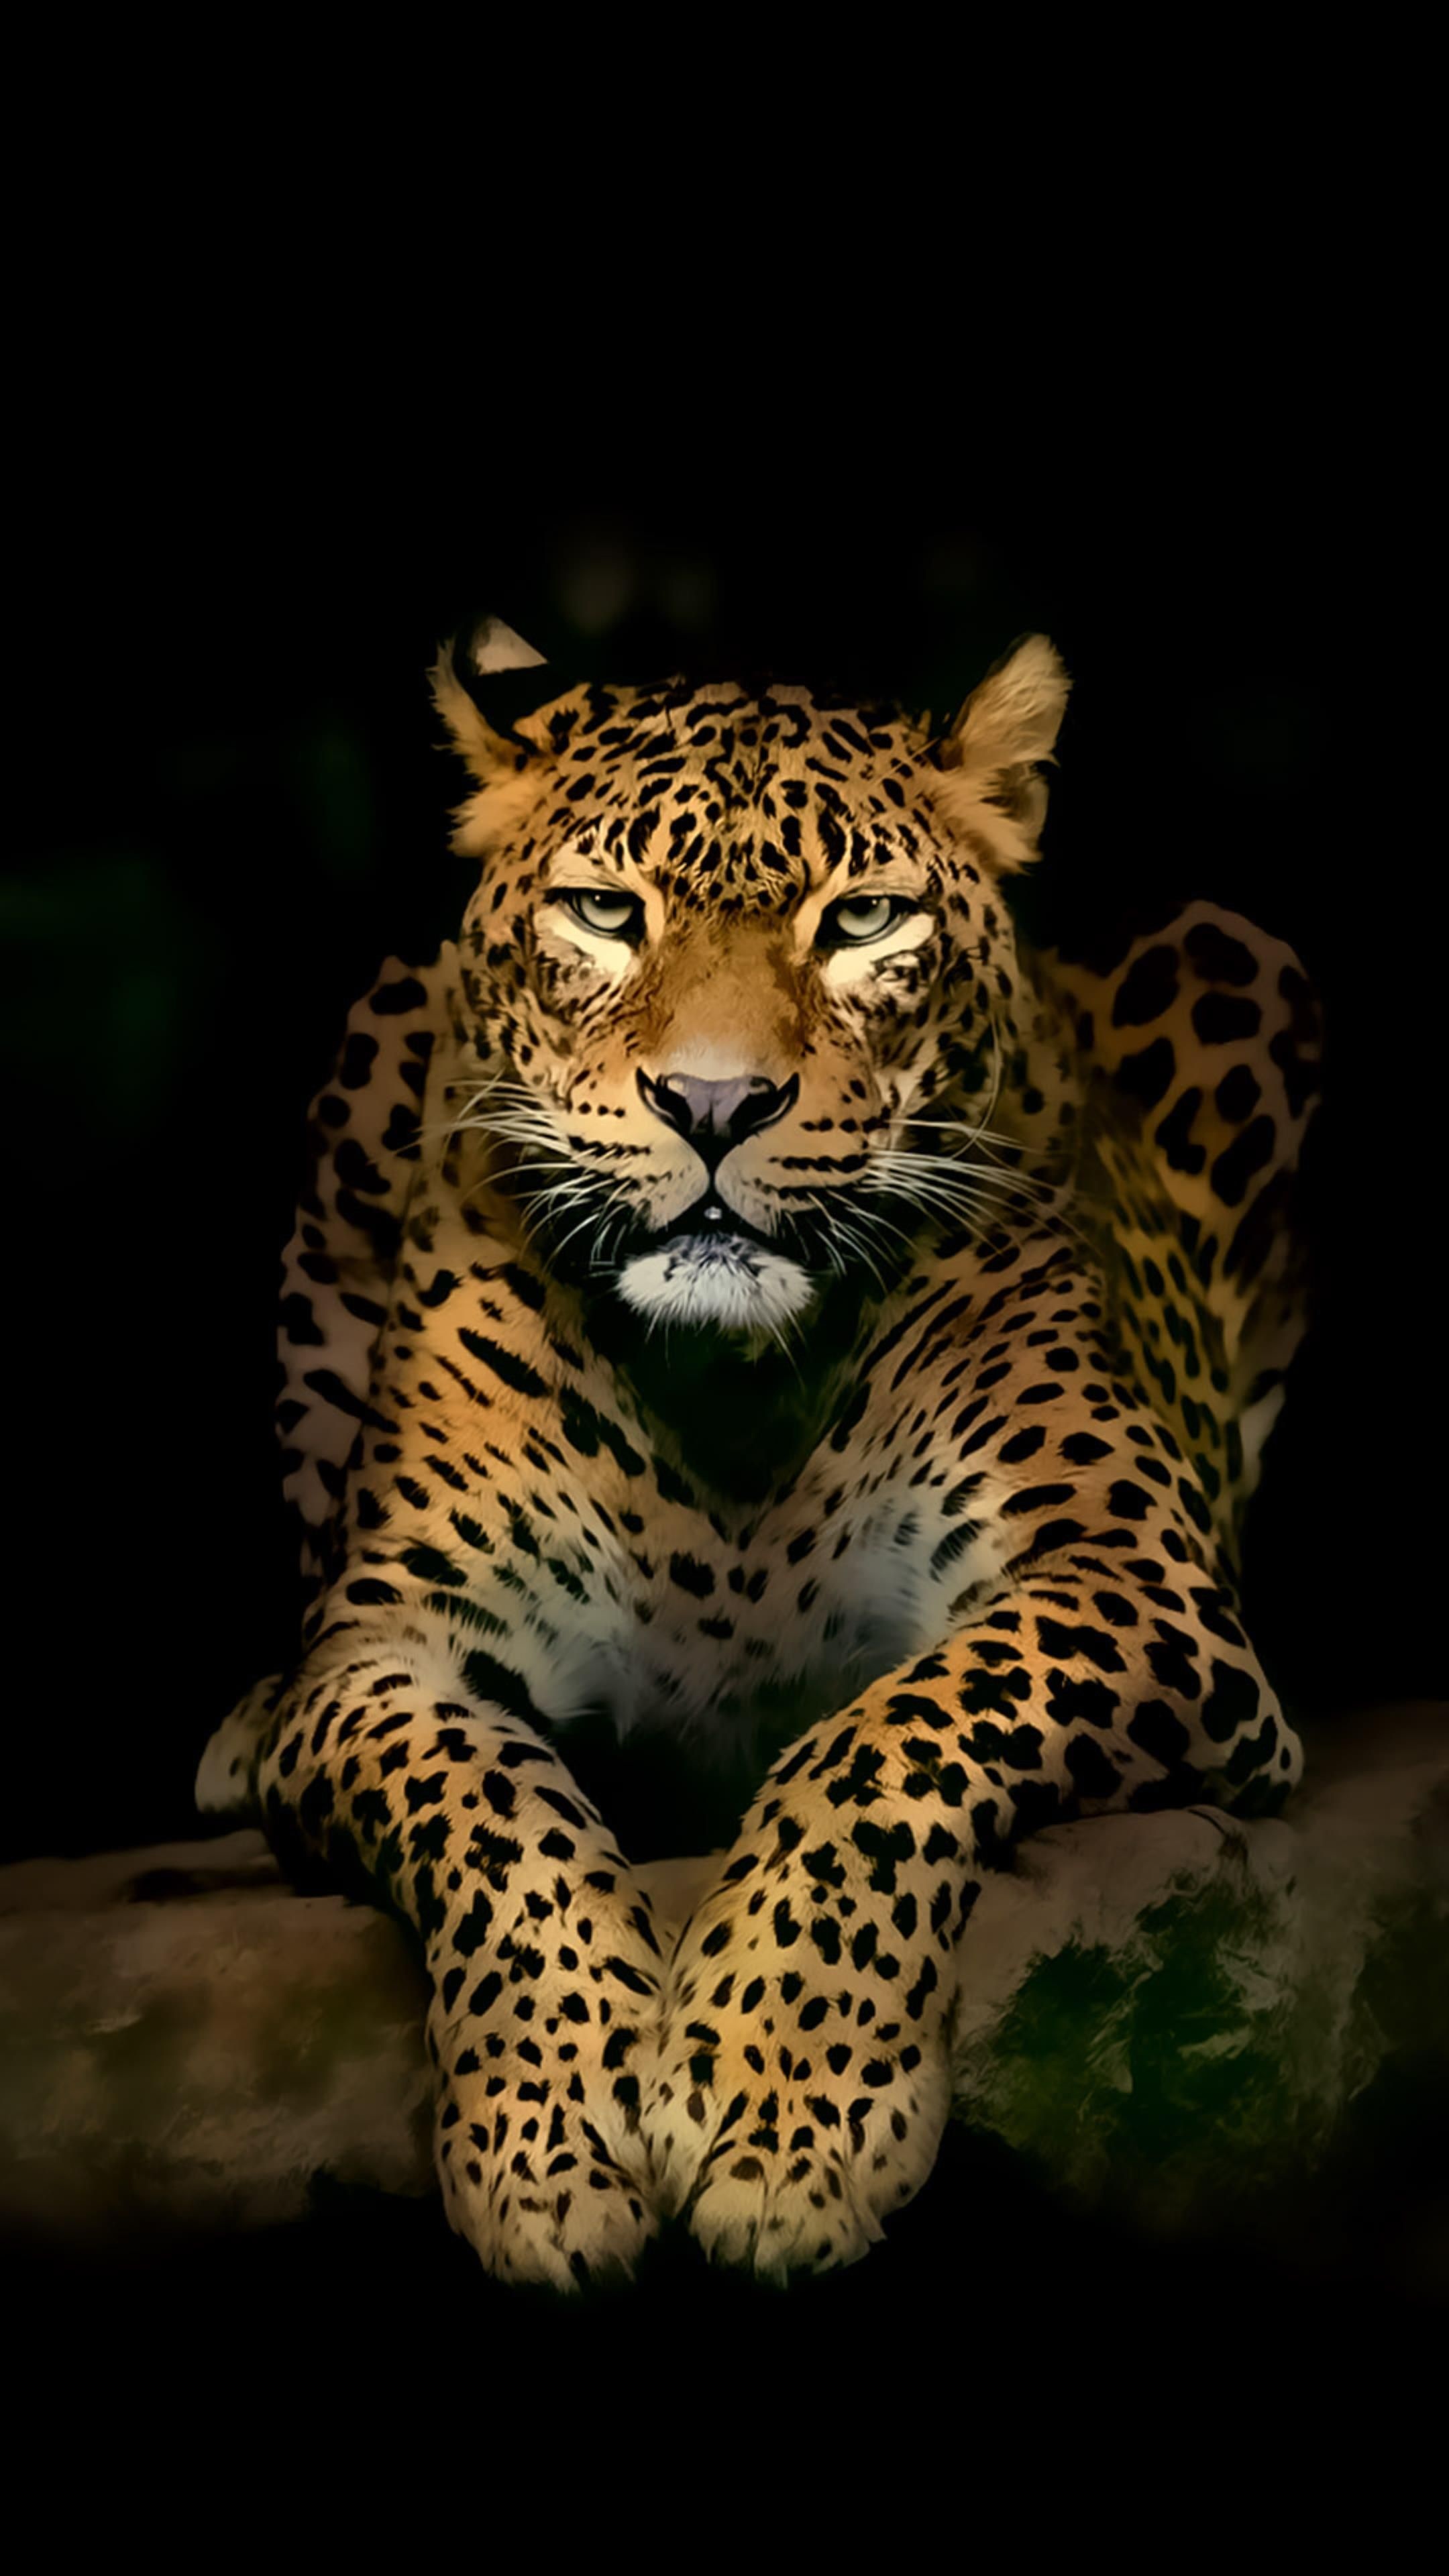 Jungle Animal, Wild animal wallpaper, Jaguar's charm, Adorable wildlife moments, 2160x3840 4K Handy